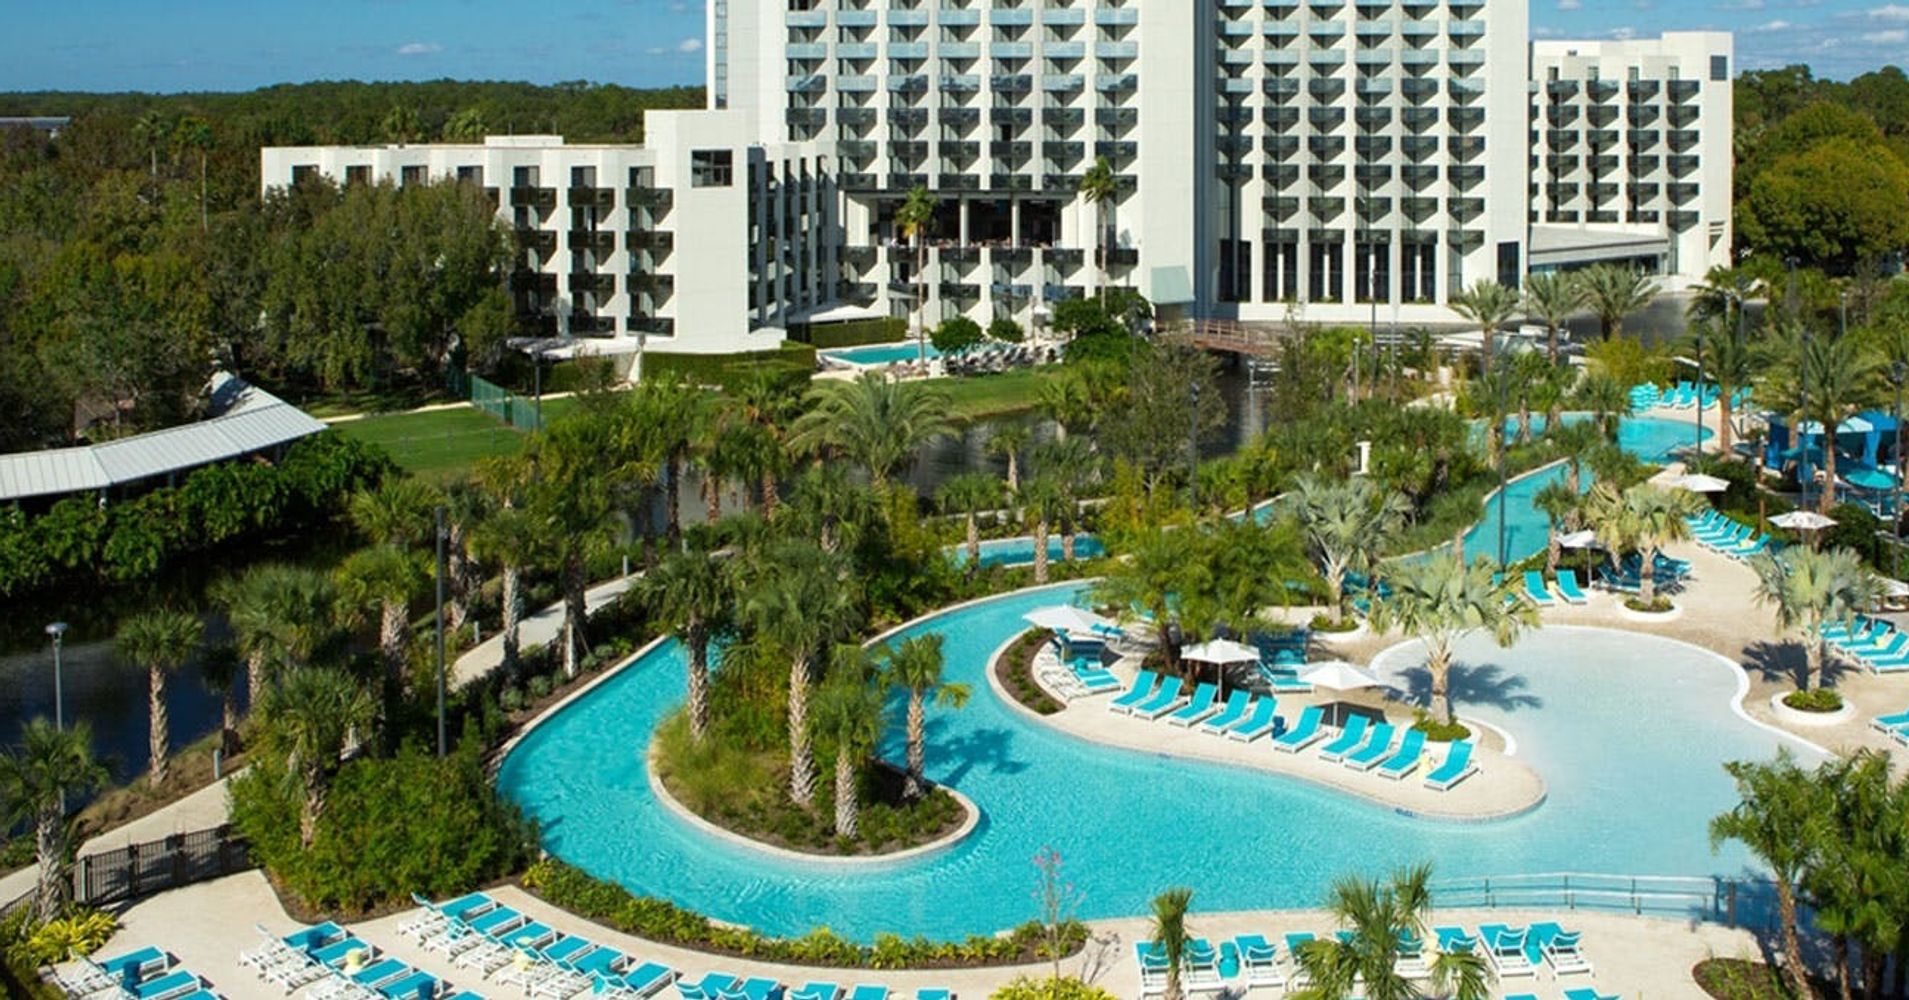 5 Cheaper Hotels Near Disney World That Are Still Totally Nice HuffPost